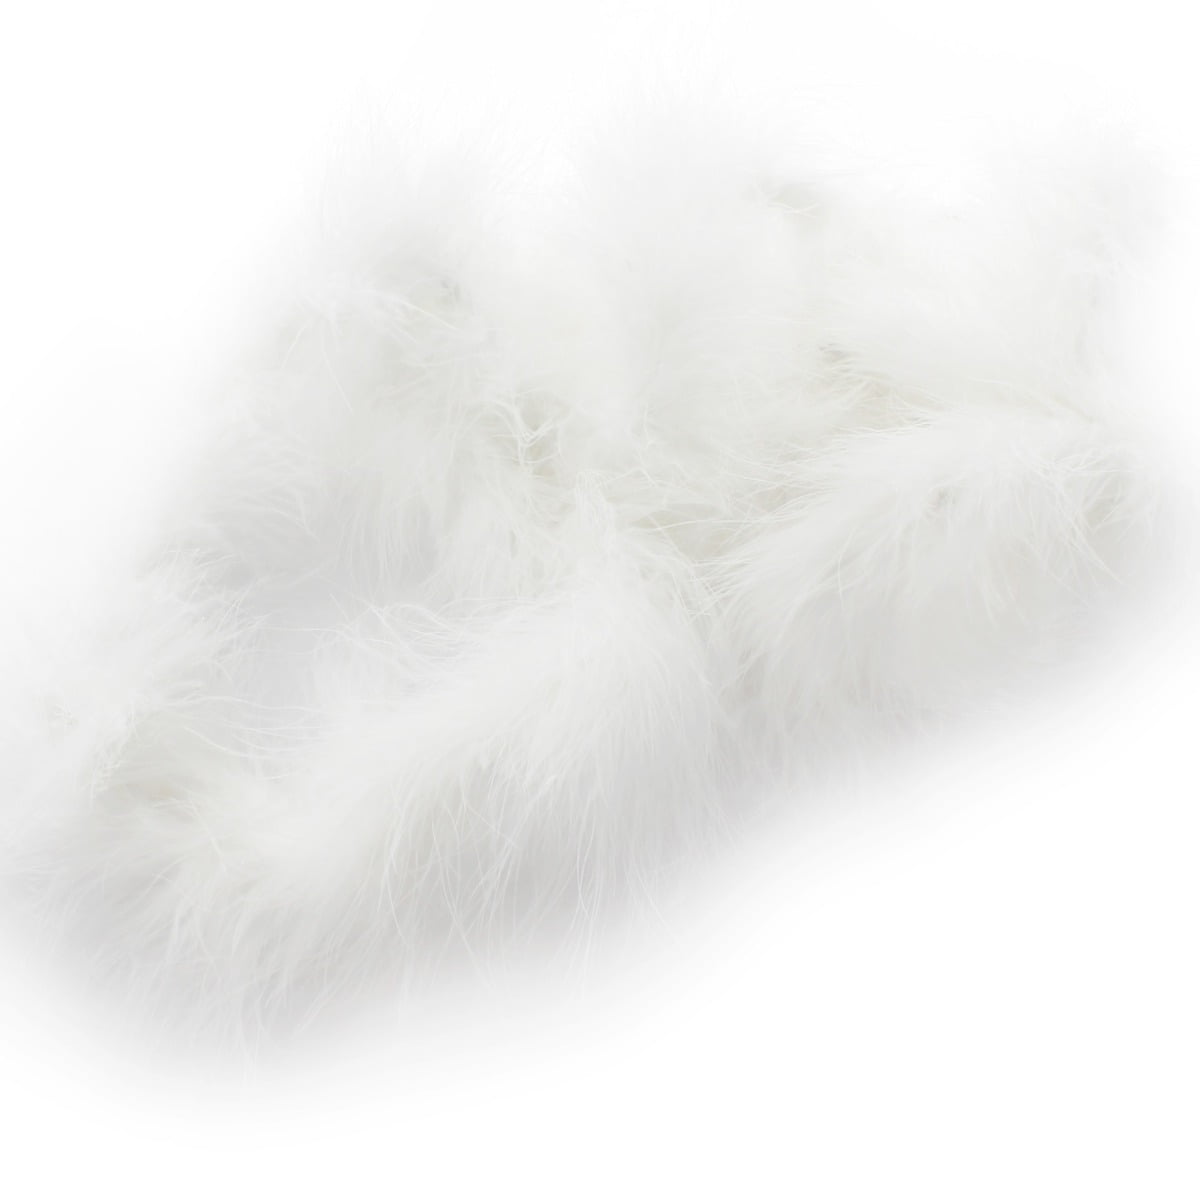 5PCS x 6.6FT Christmas Tree White Feather,Fluffy Garland Boa